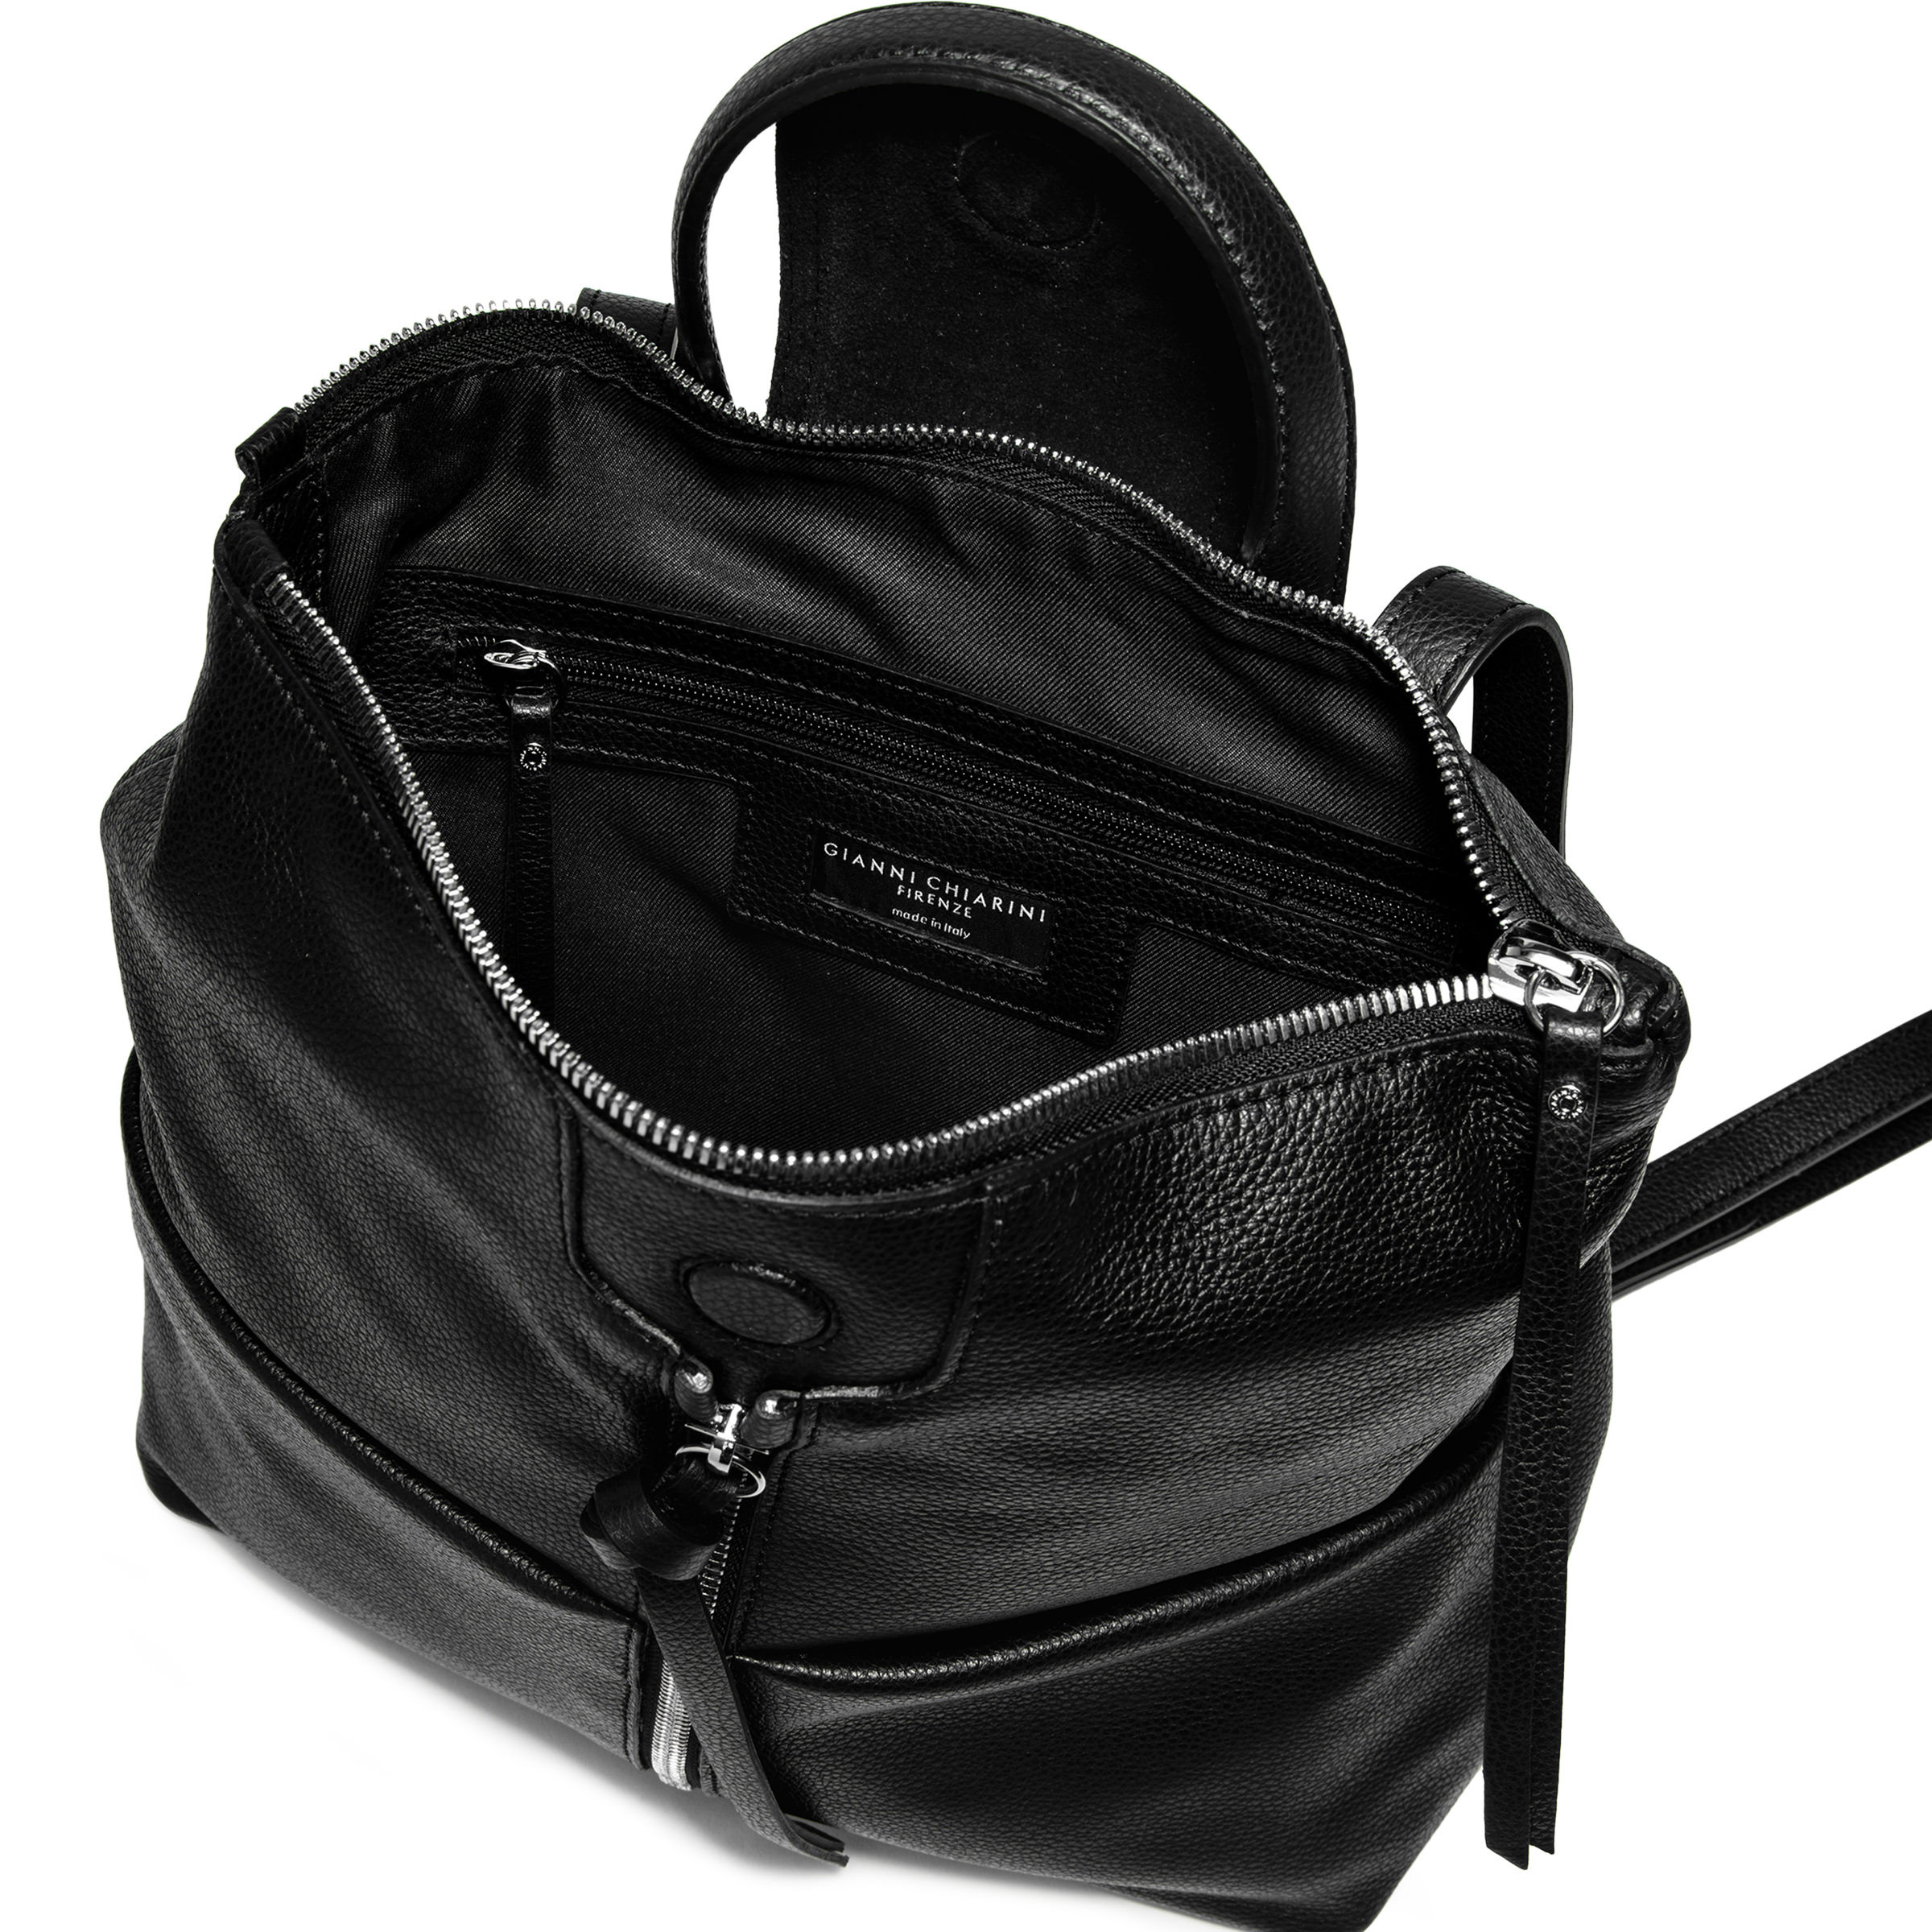 Gianni Chiarini - Jade leather backpack, Black, large image number 4